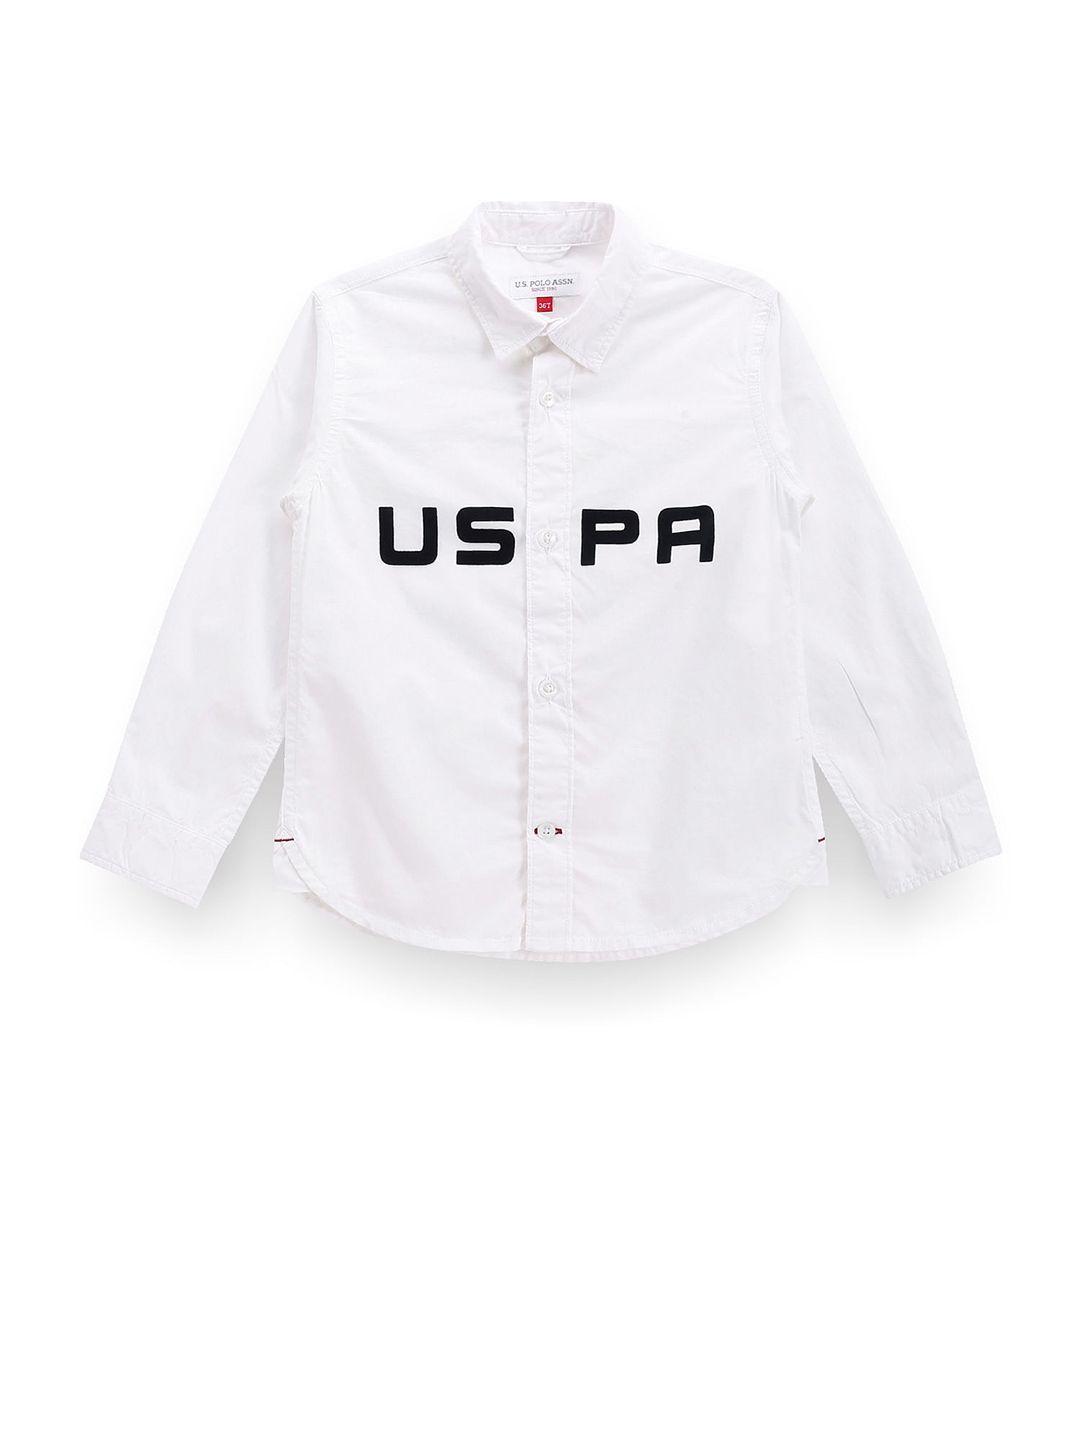 u.s. polo assn. kids boys classic fit brand logo printed casual shirt